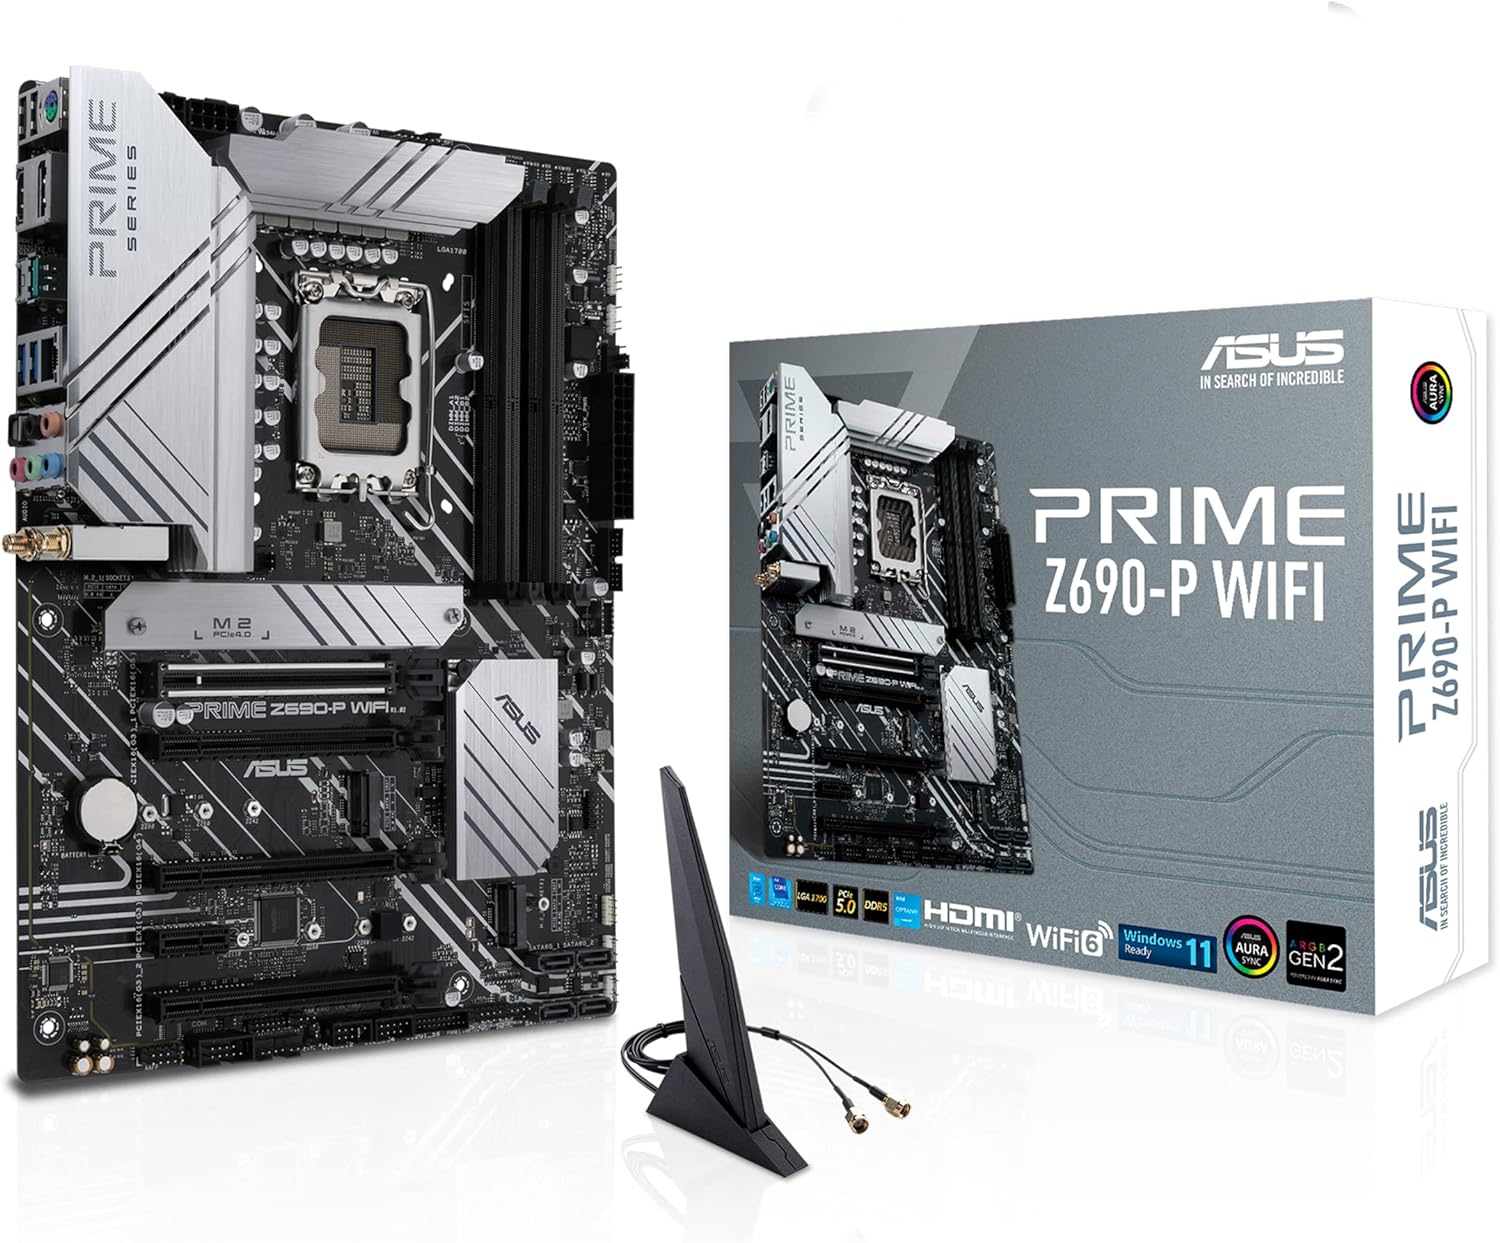 Sleek Asus Prime Z690P WiFi Intel Z690 Lga 1700 Atx motherboard for high performance computing. 0195553469616